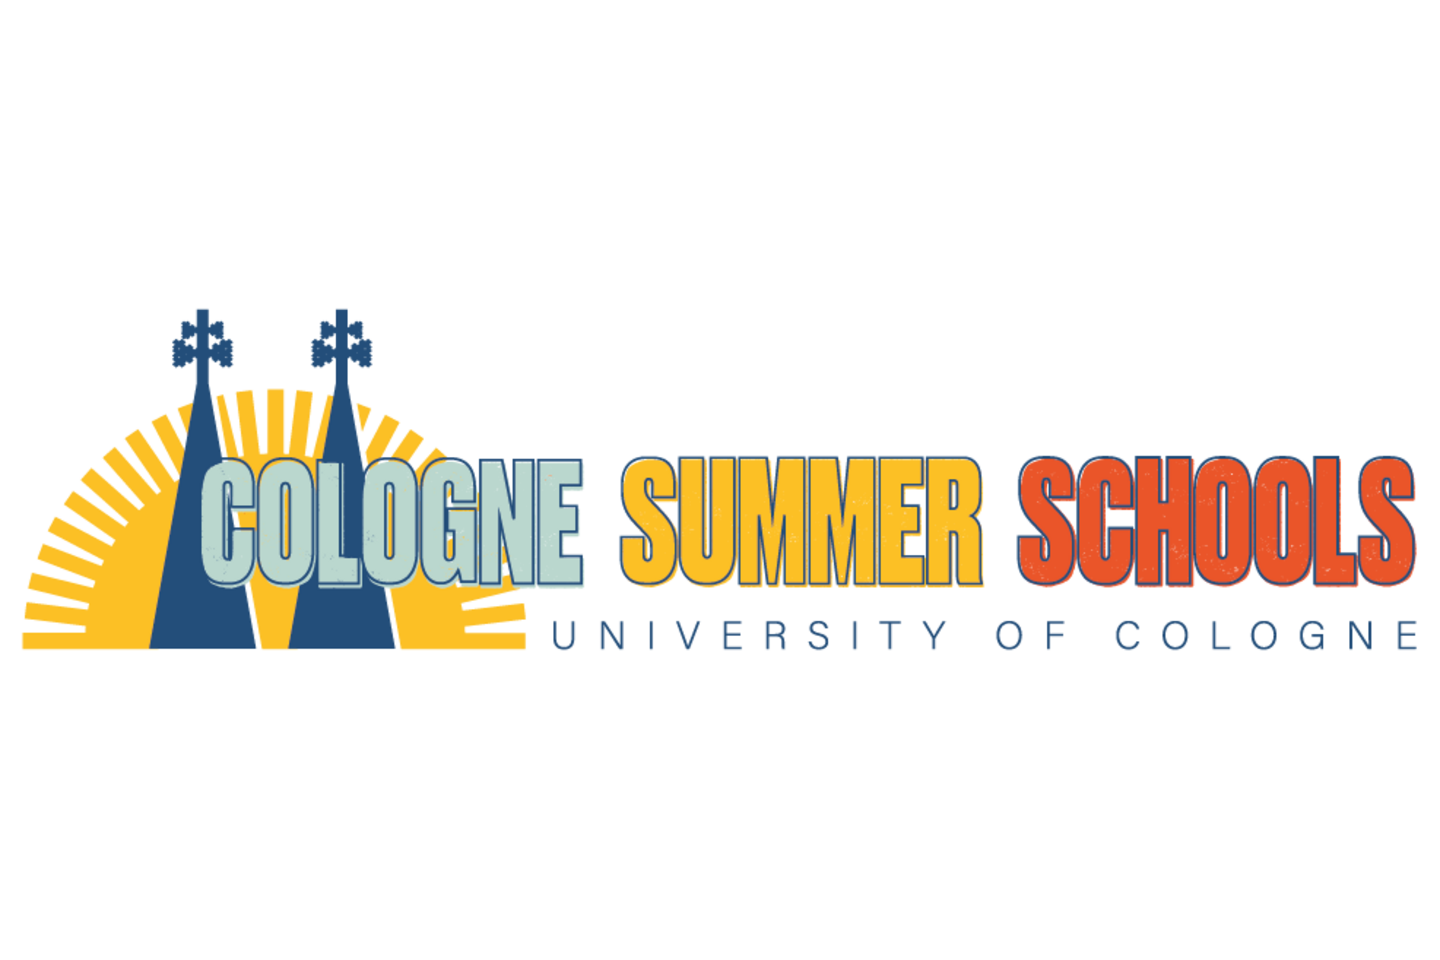 Cologne Summer School